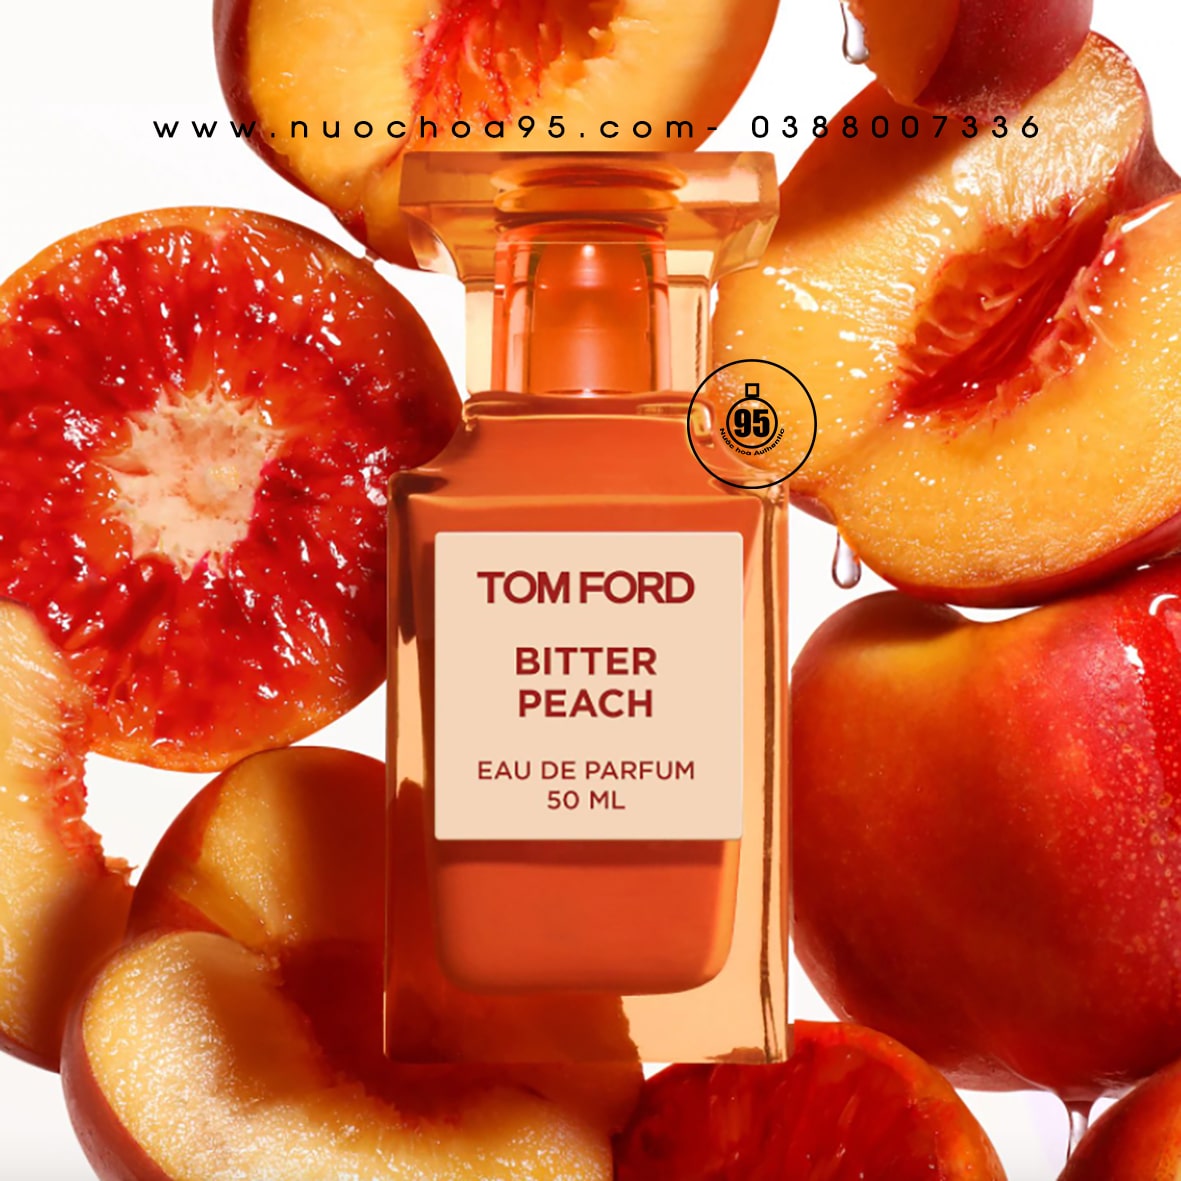 Nước hoa Tom Ford Bitter Peach - Ảnh 1